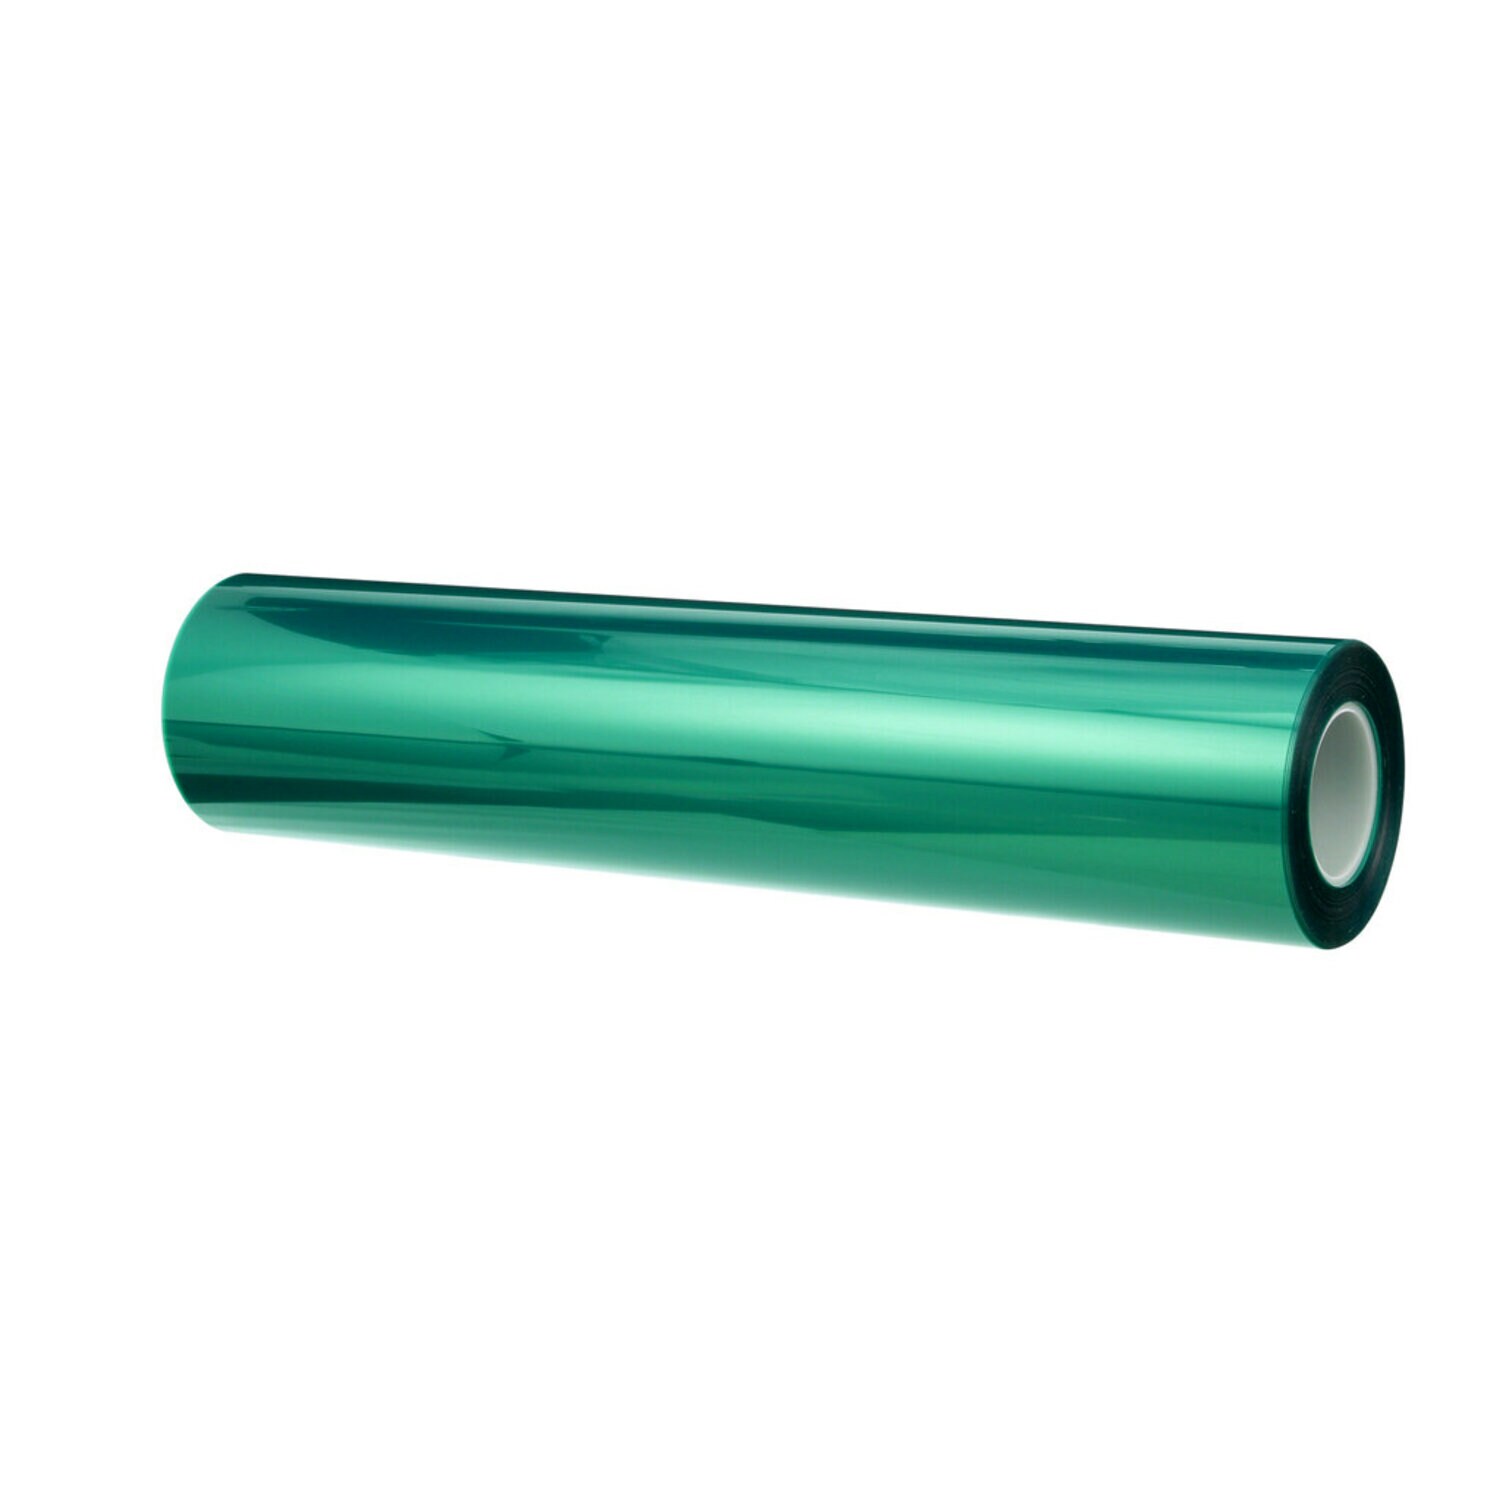 7100016585 - 3M Polyester Tape 8992L, Green 1280 mm x 228.6 m, 3.2 mil, 1 roll per
case